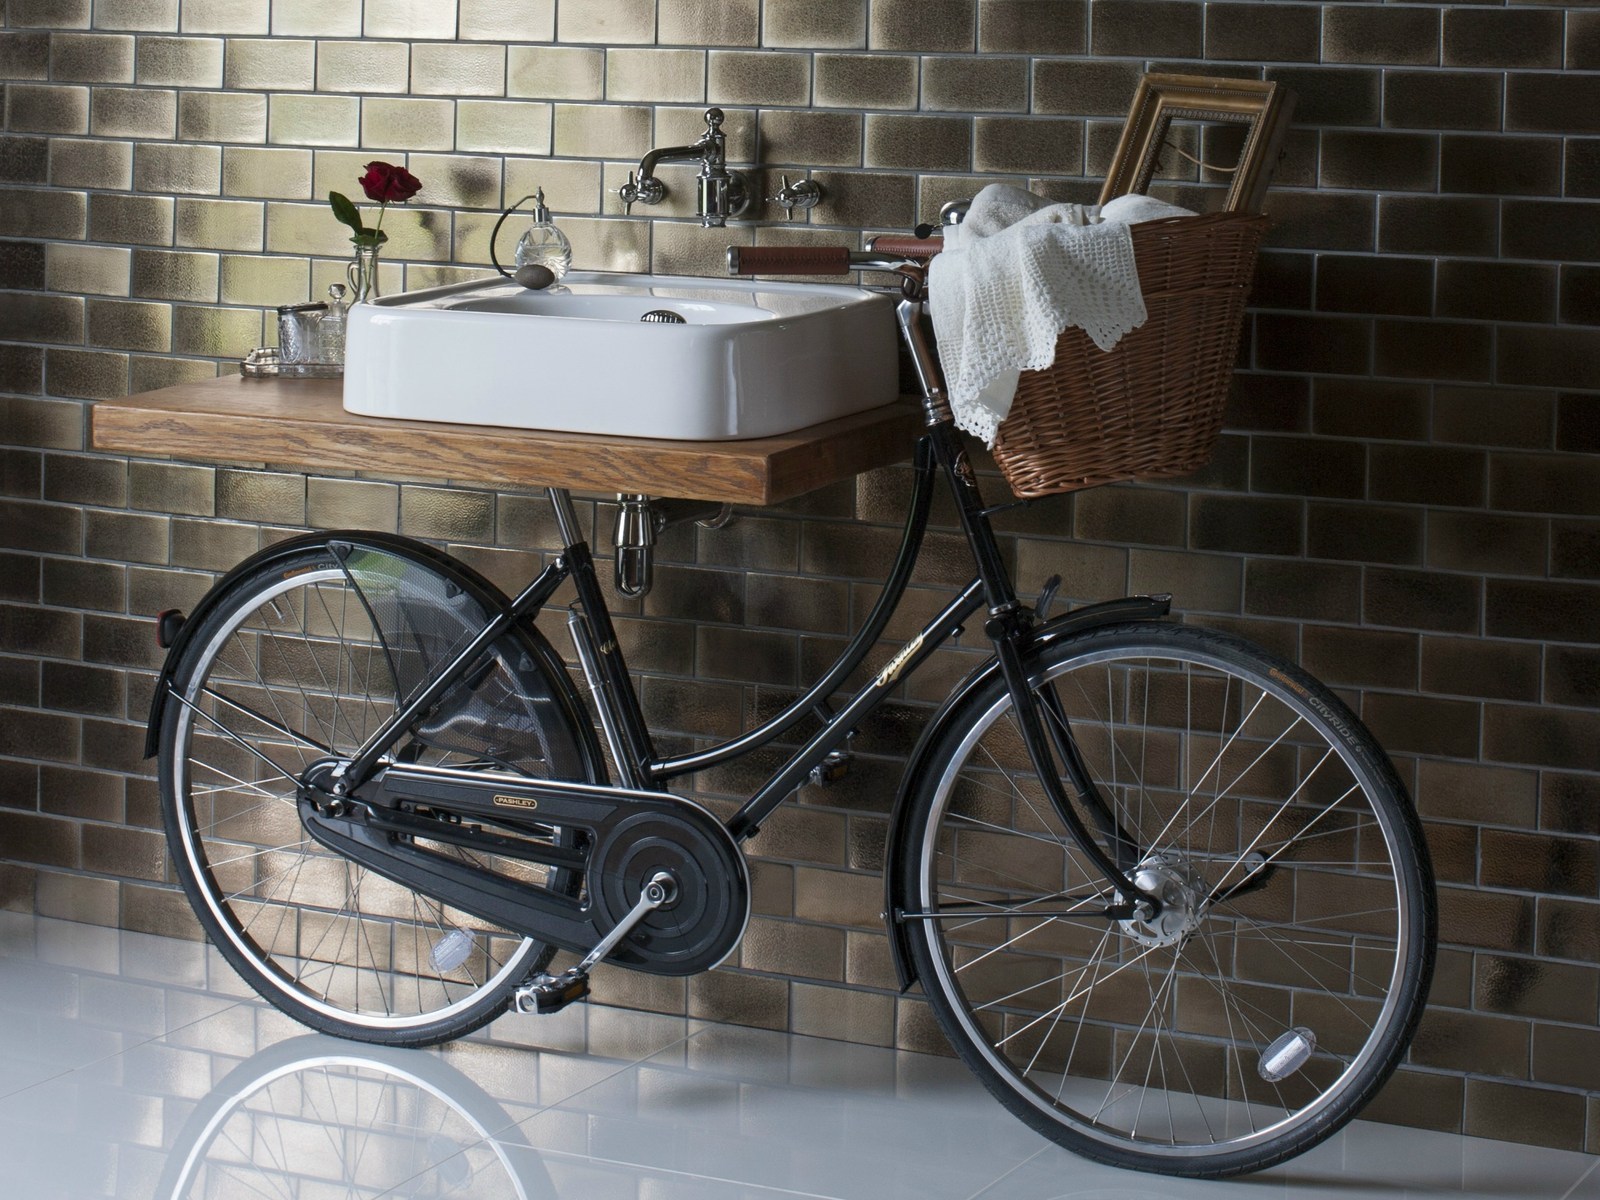 vintage-washbasin-bicy-by-regia-is-basin-bike-1.jpg